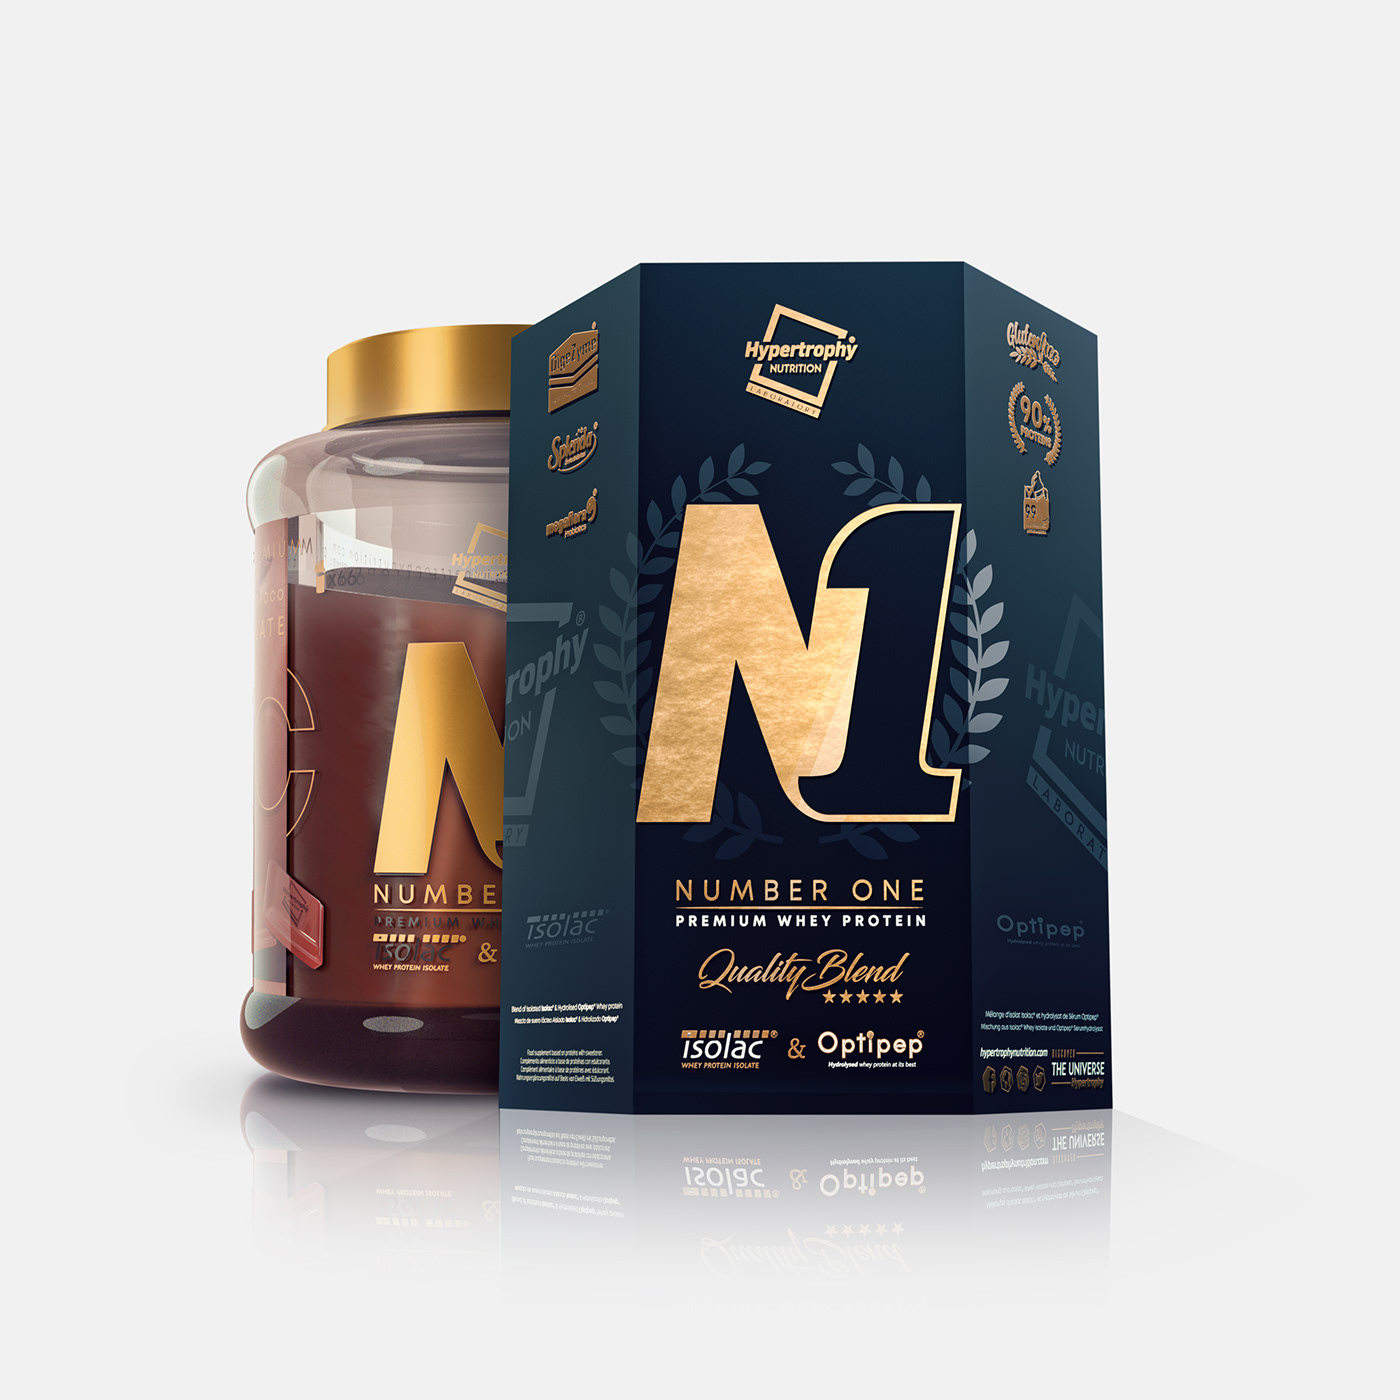 elegance gold golden Label nutrition protein soft sport supplement supplements